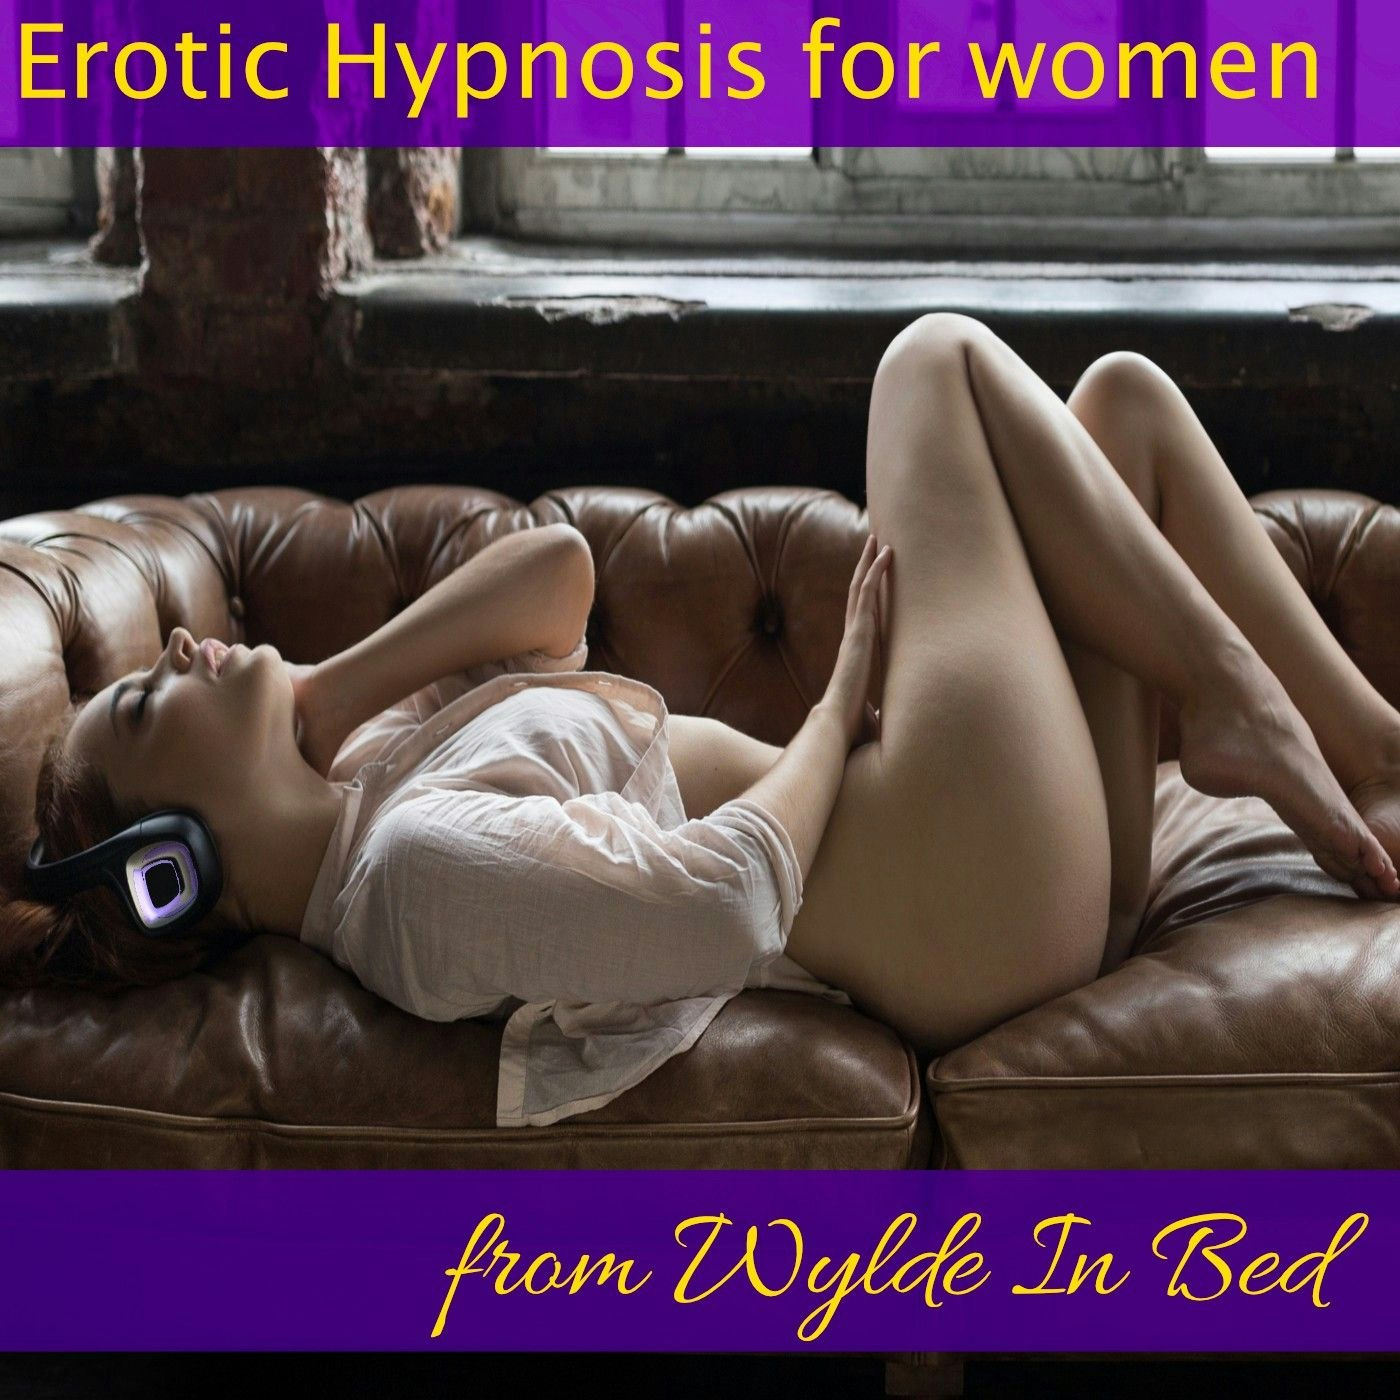 barbara r davis add photo erotic hypnosis for women